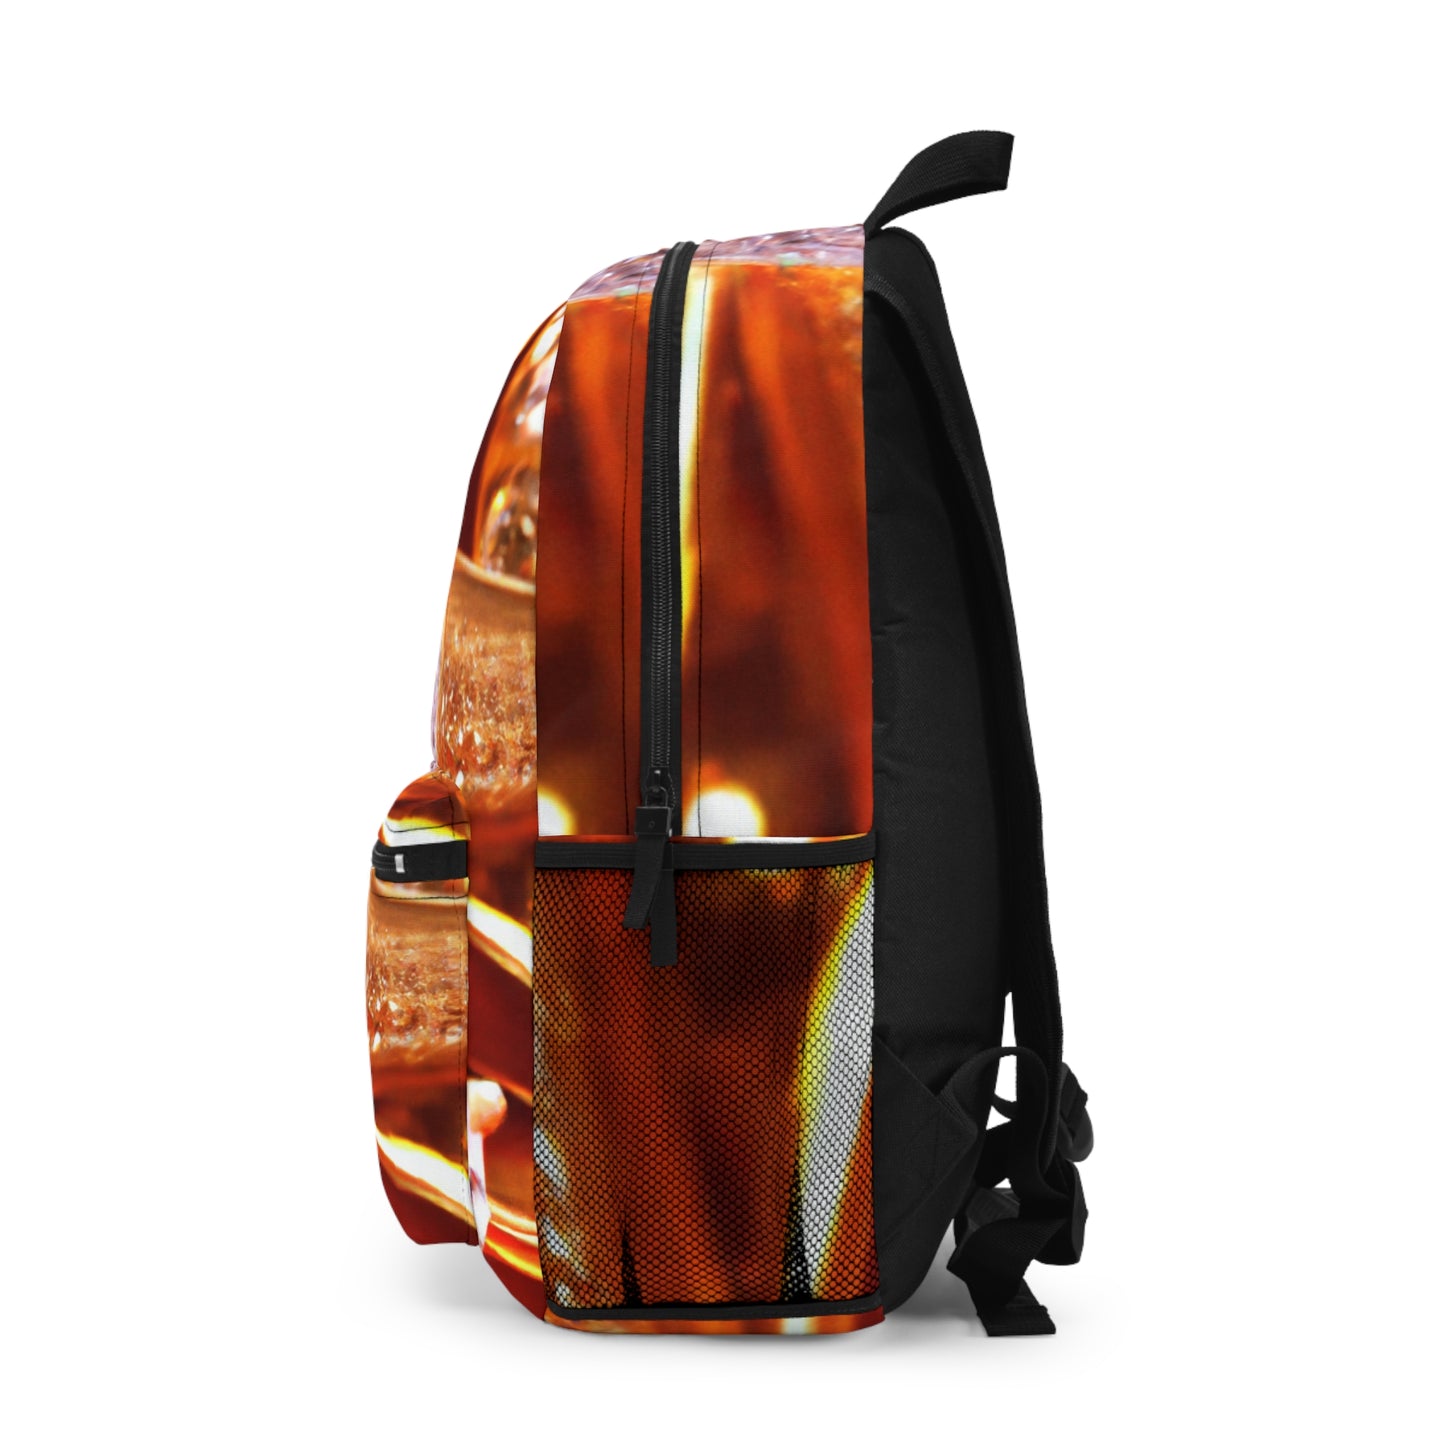 Quillan Winslow - Backpack